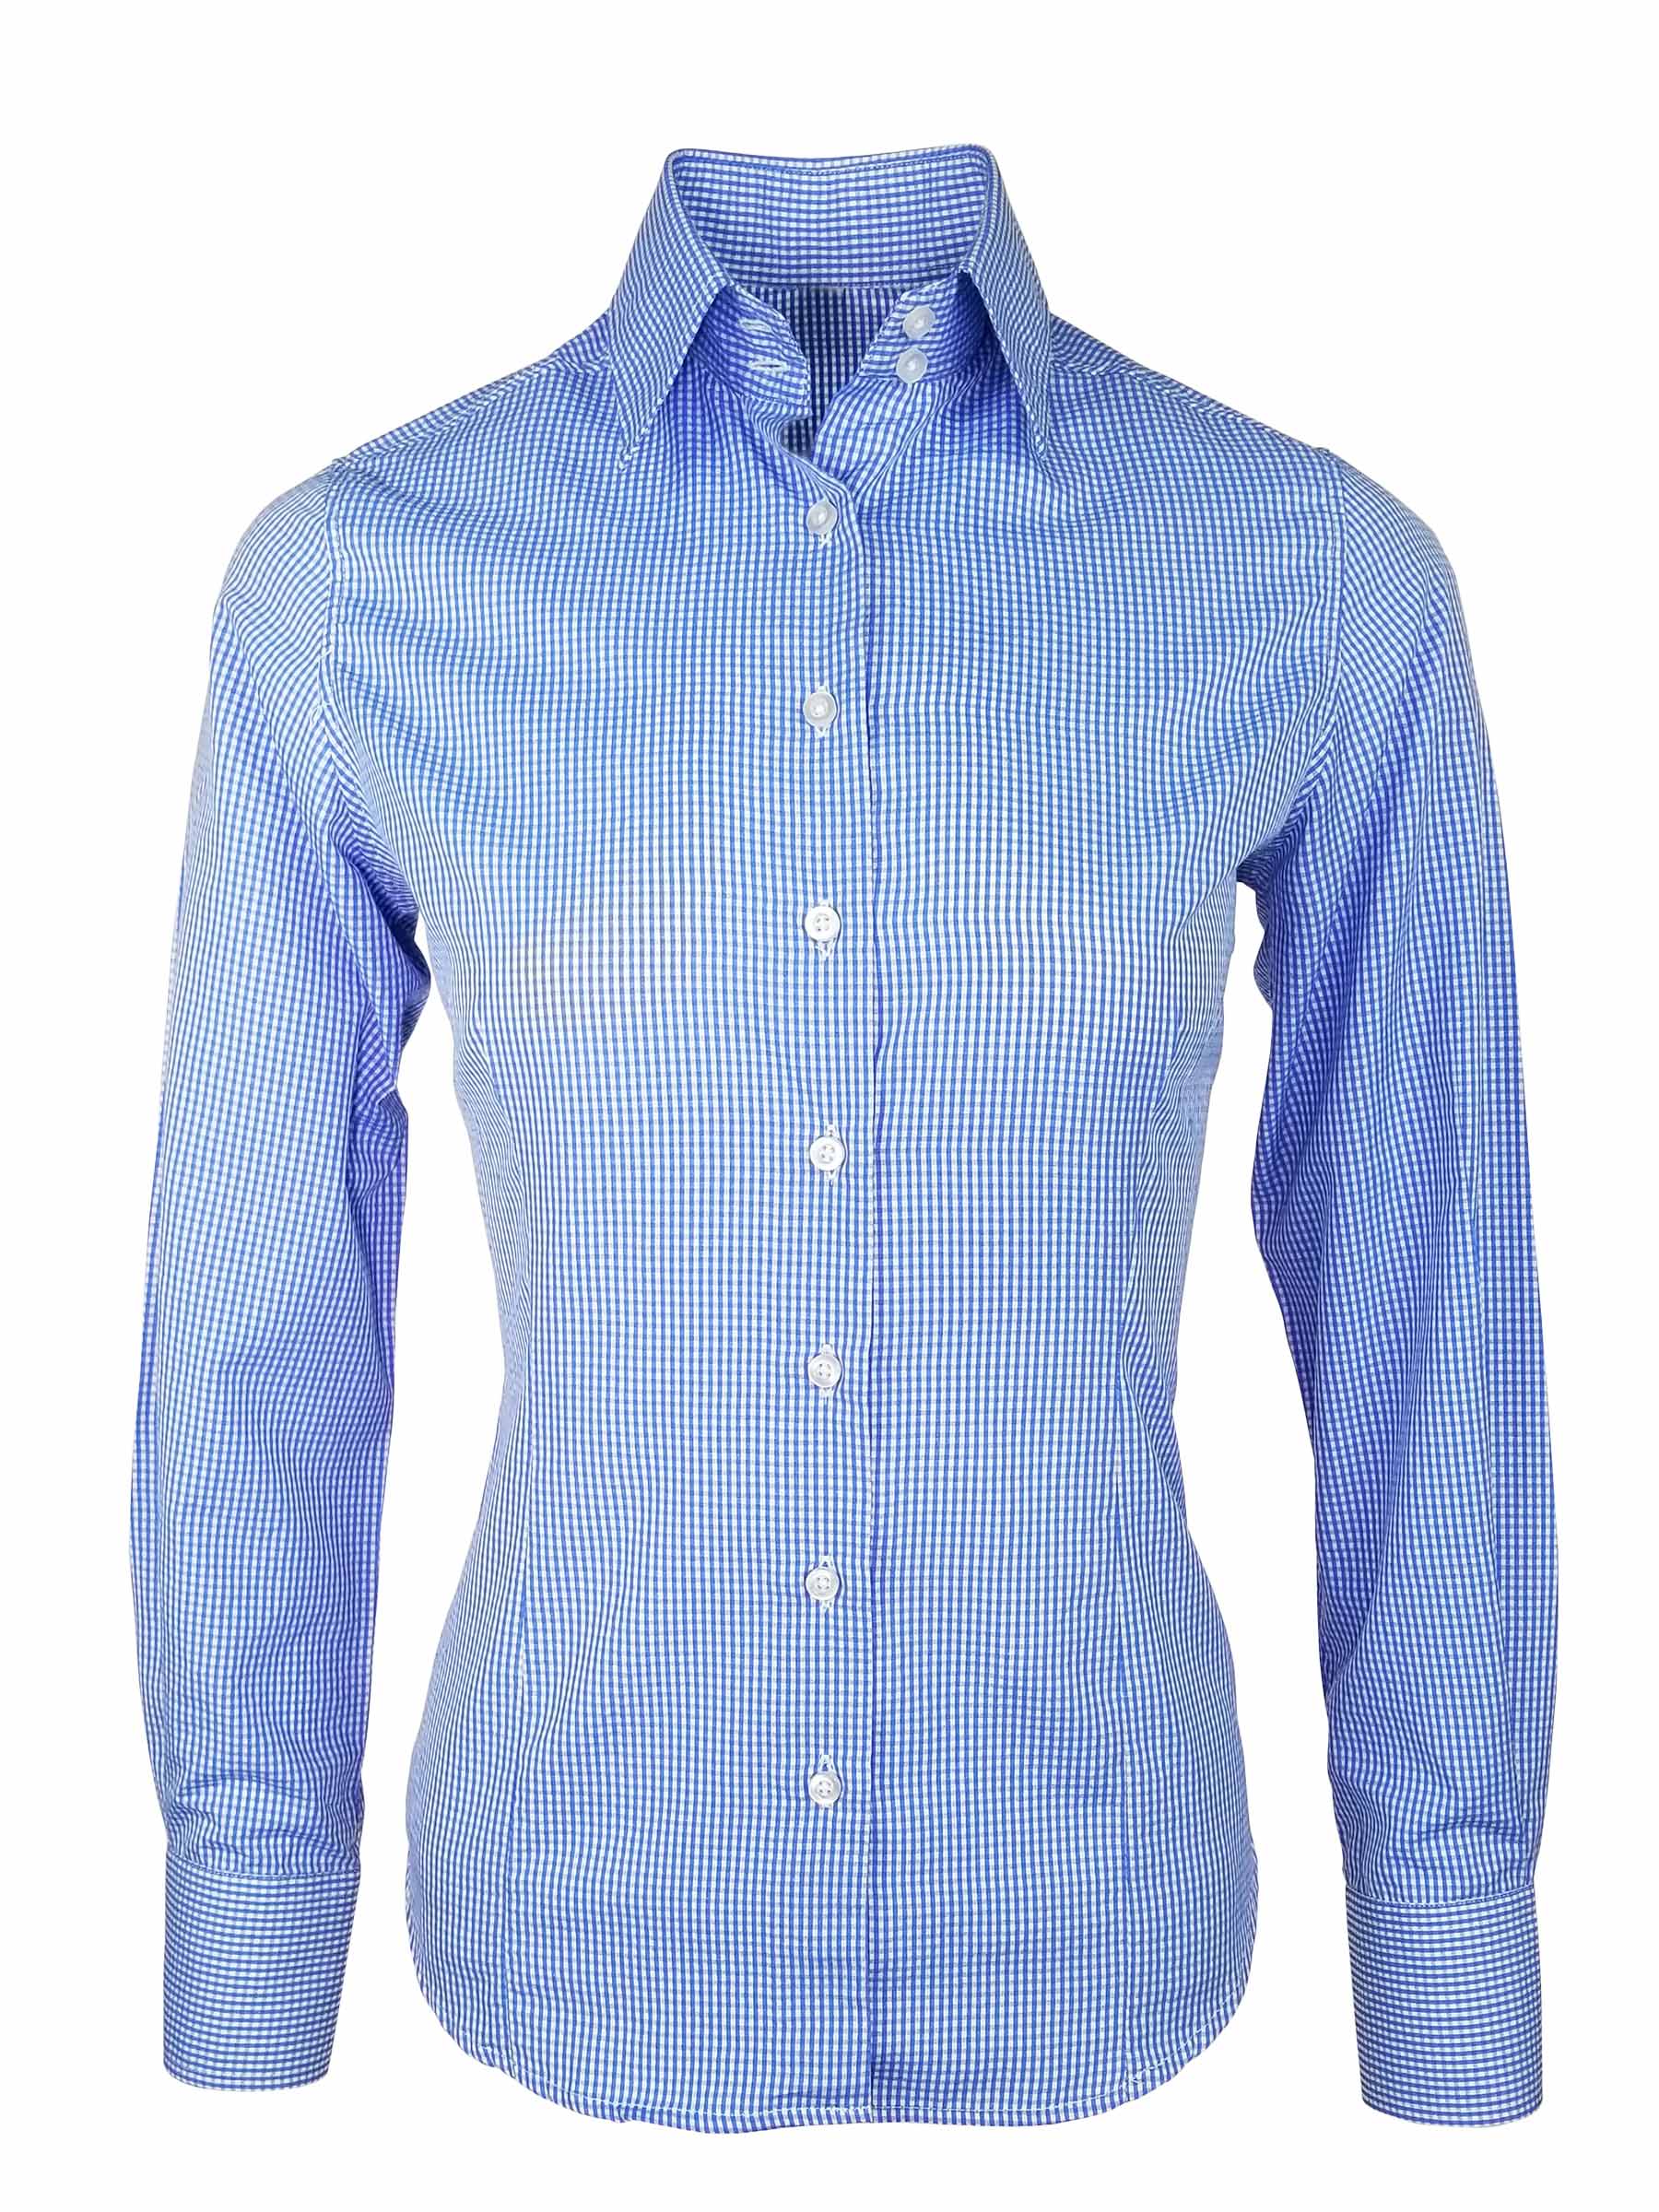 Women's Gingham Shirt - Blue Mini Gingham Check Shirt Long Sleeve ...